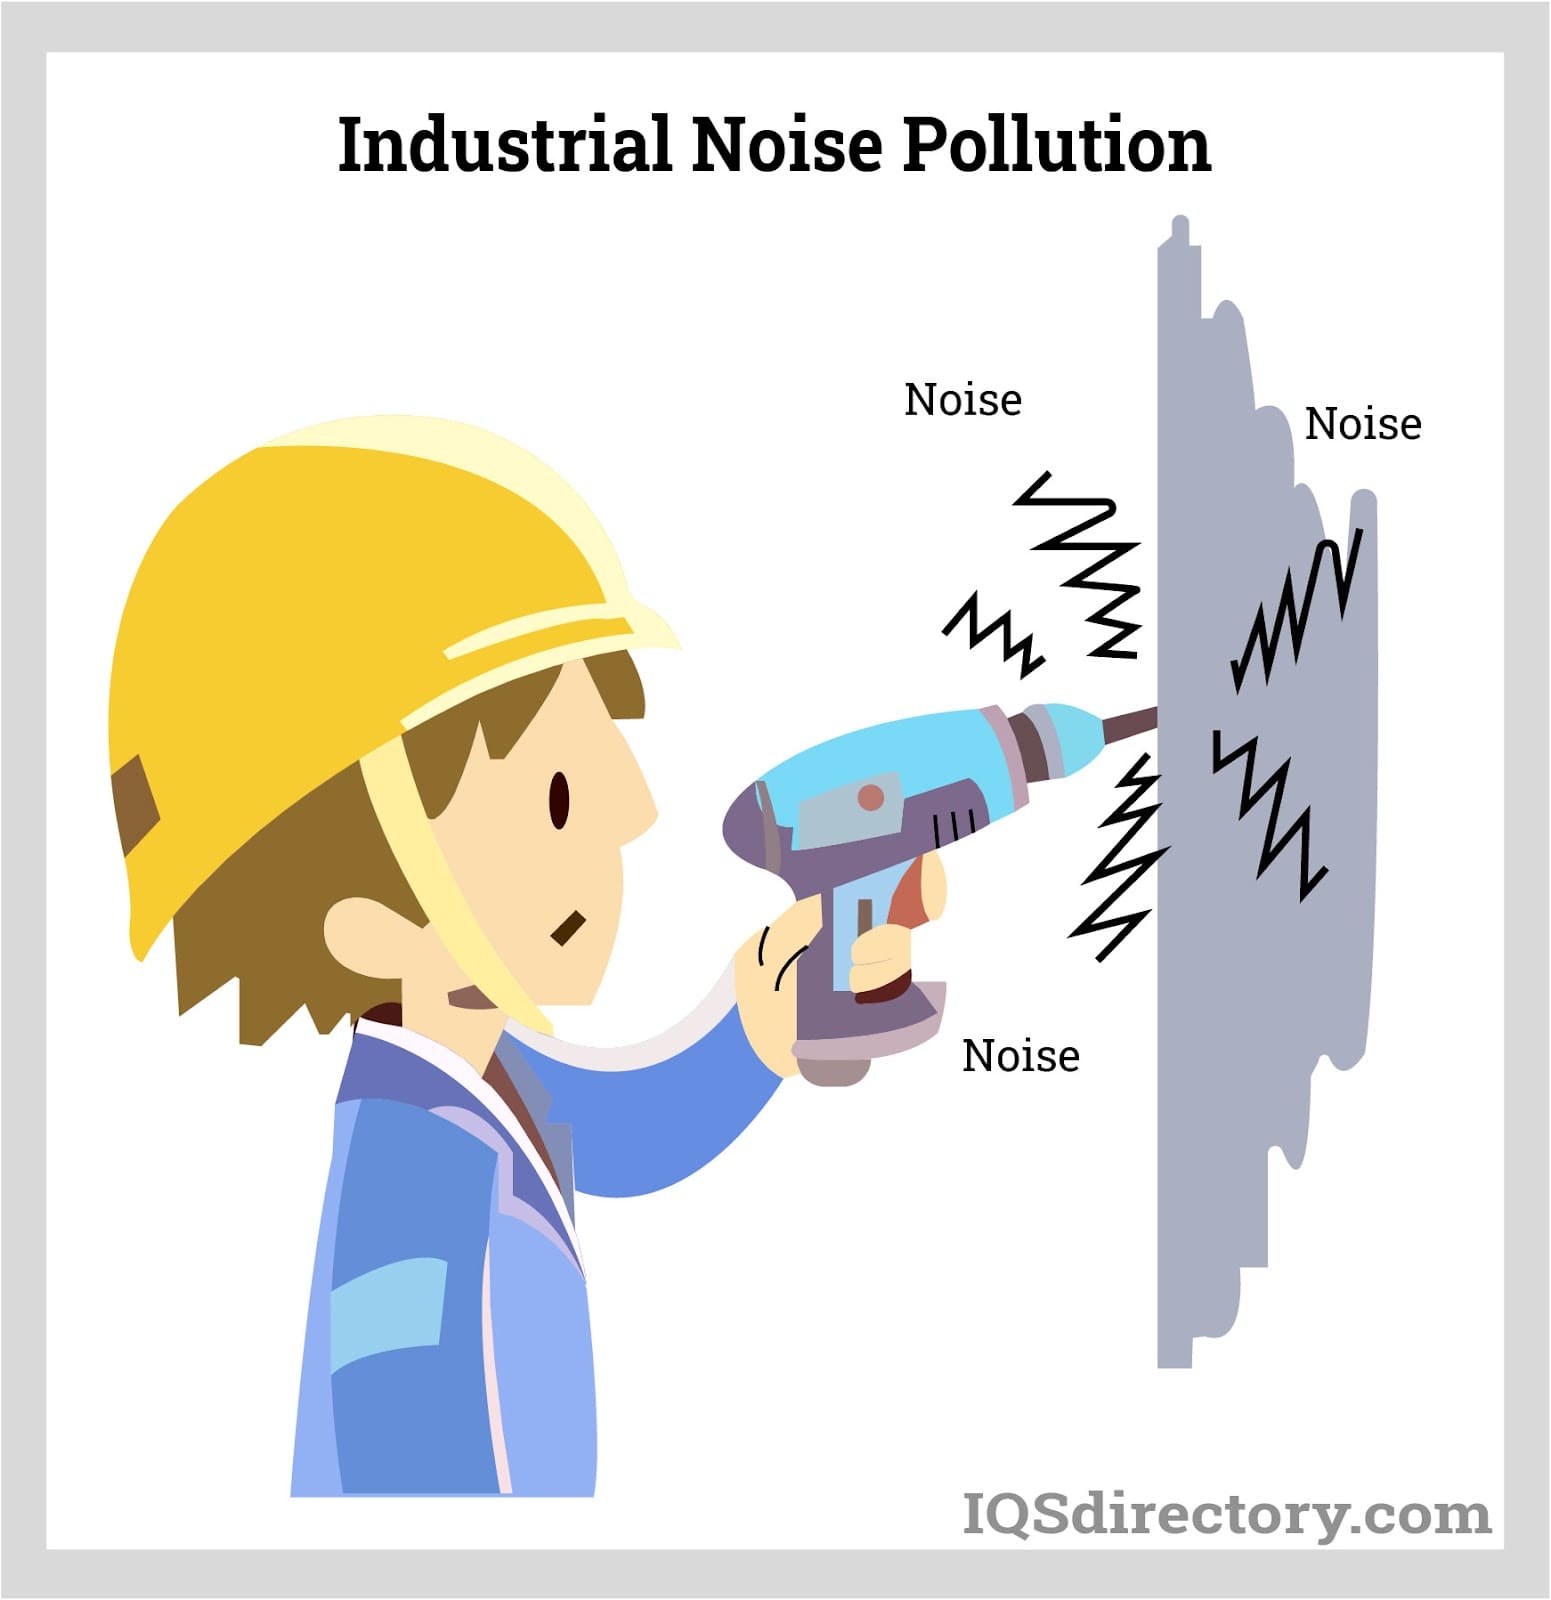 noise pollution control